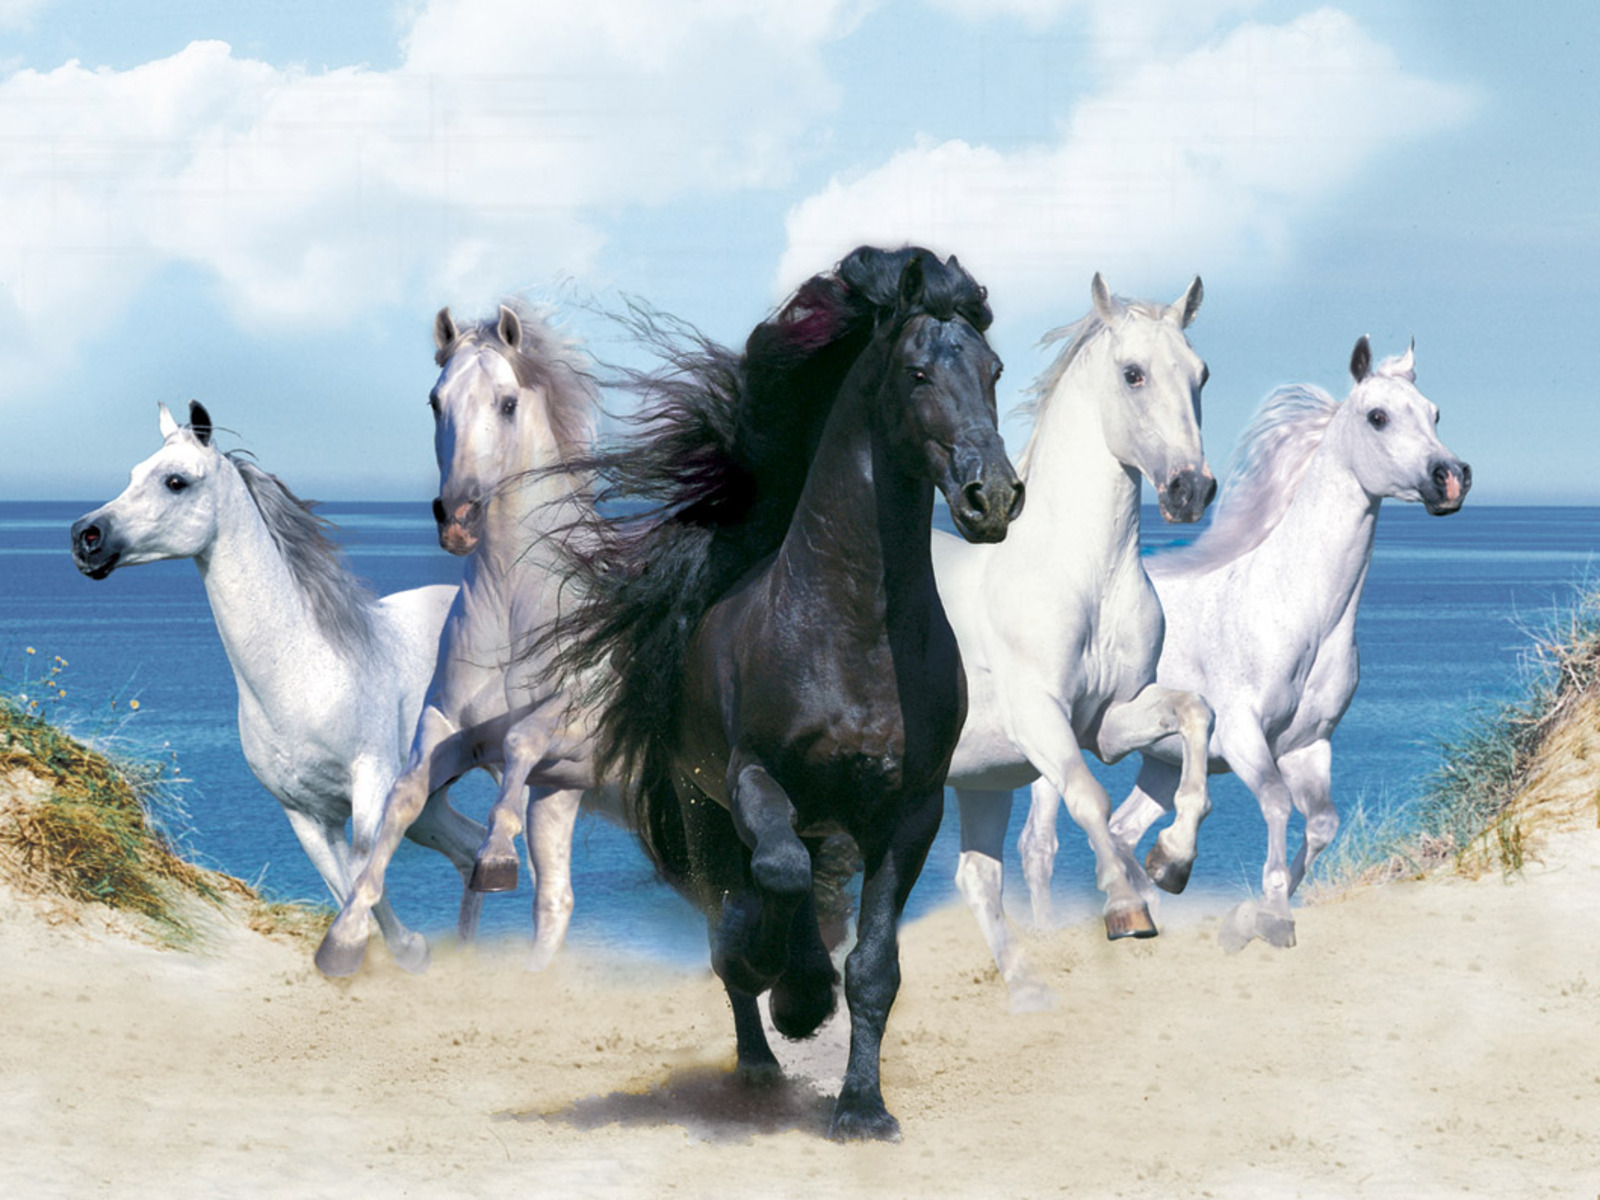 The Wallpaper Backgrounds Wallpaper of Horses